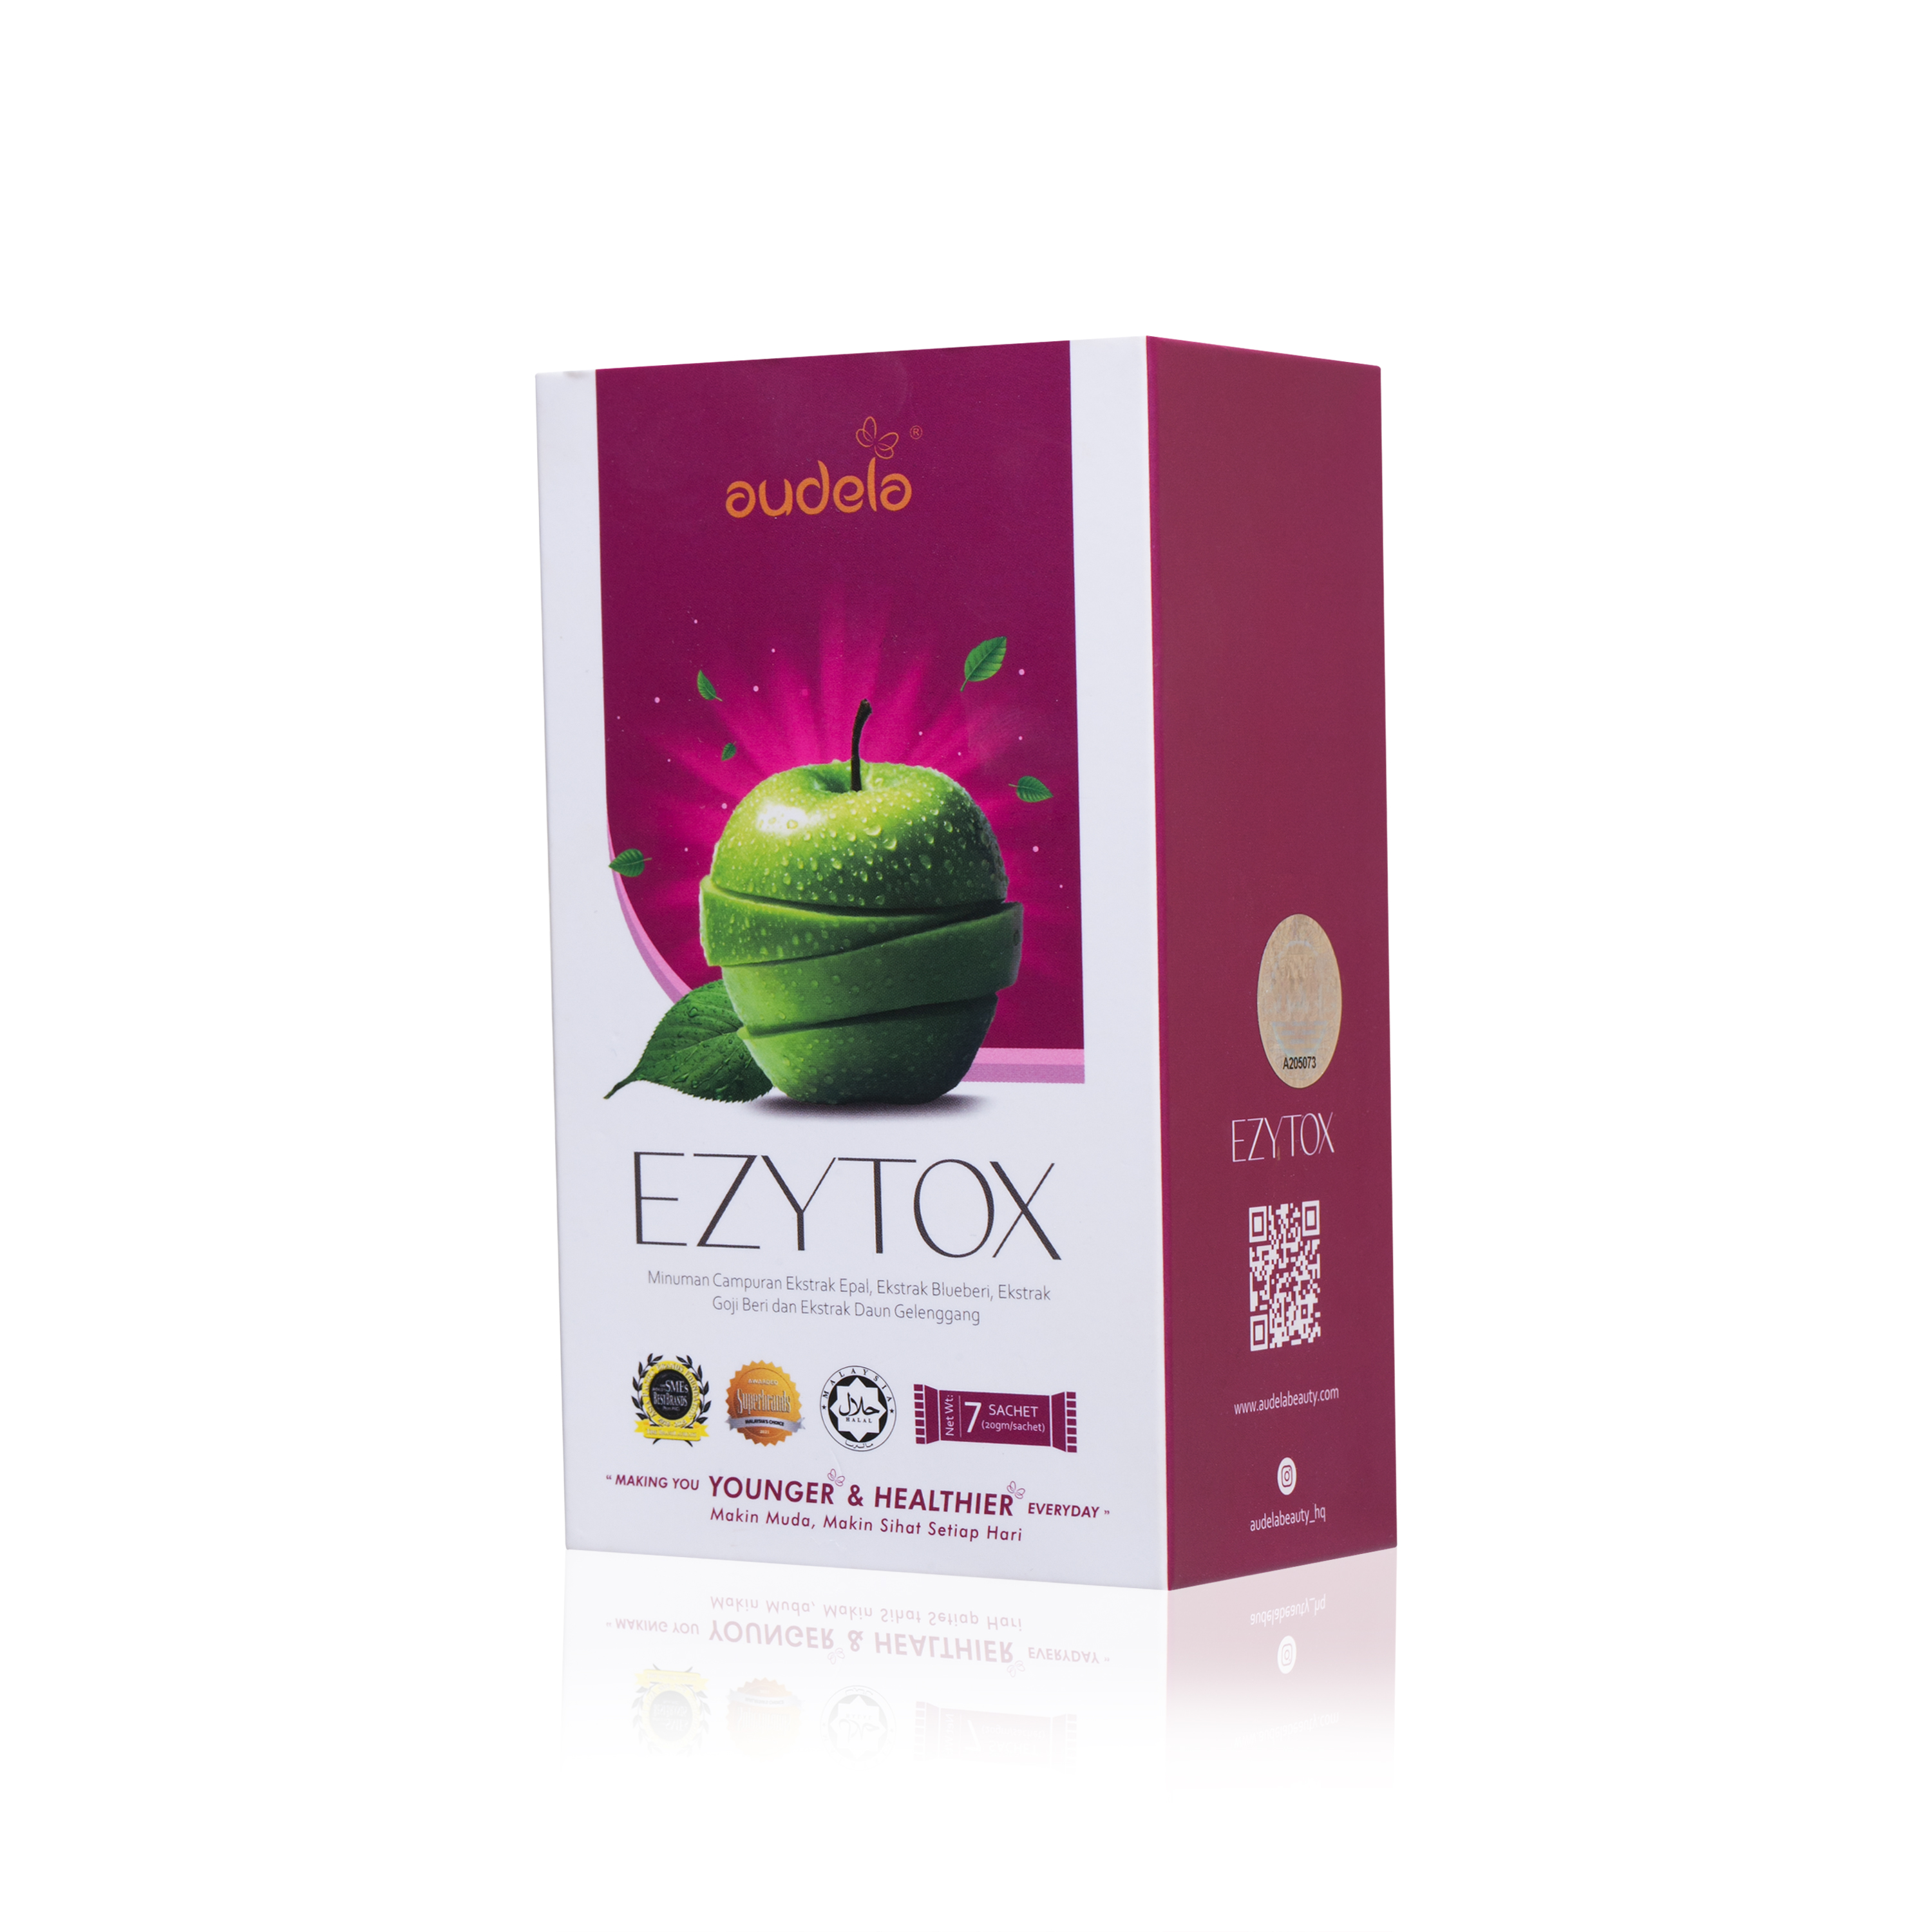 Ezytox - Audela New Product 